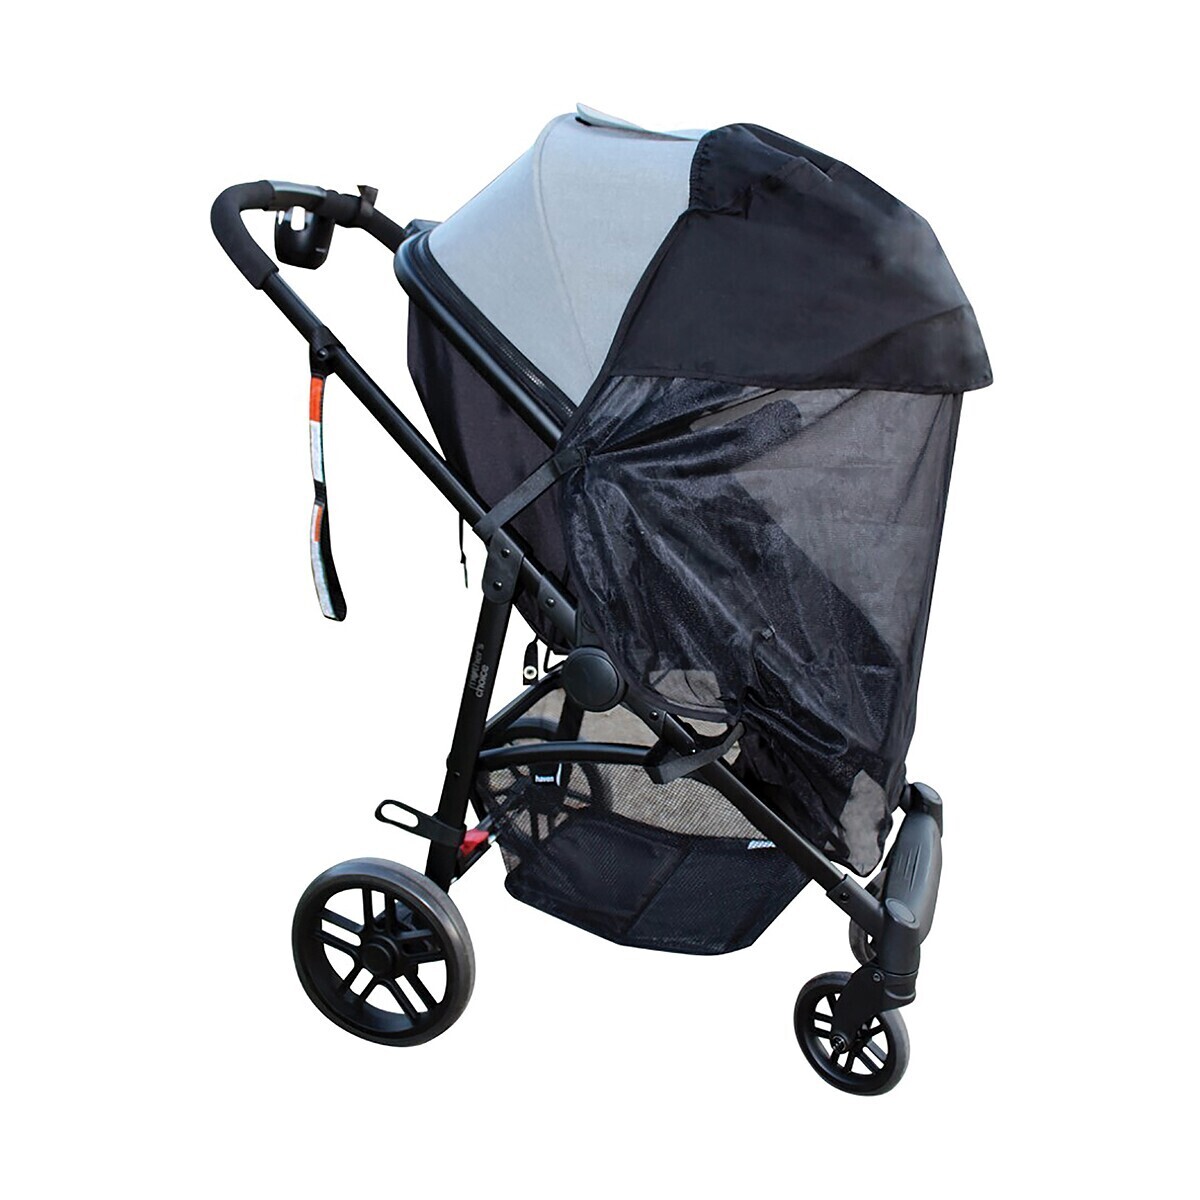 Mothers Choice Stroller Sunshade - Universal